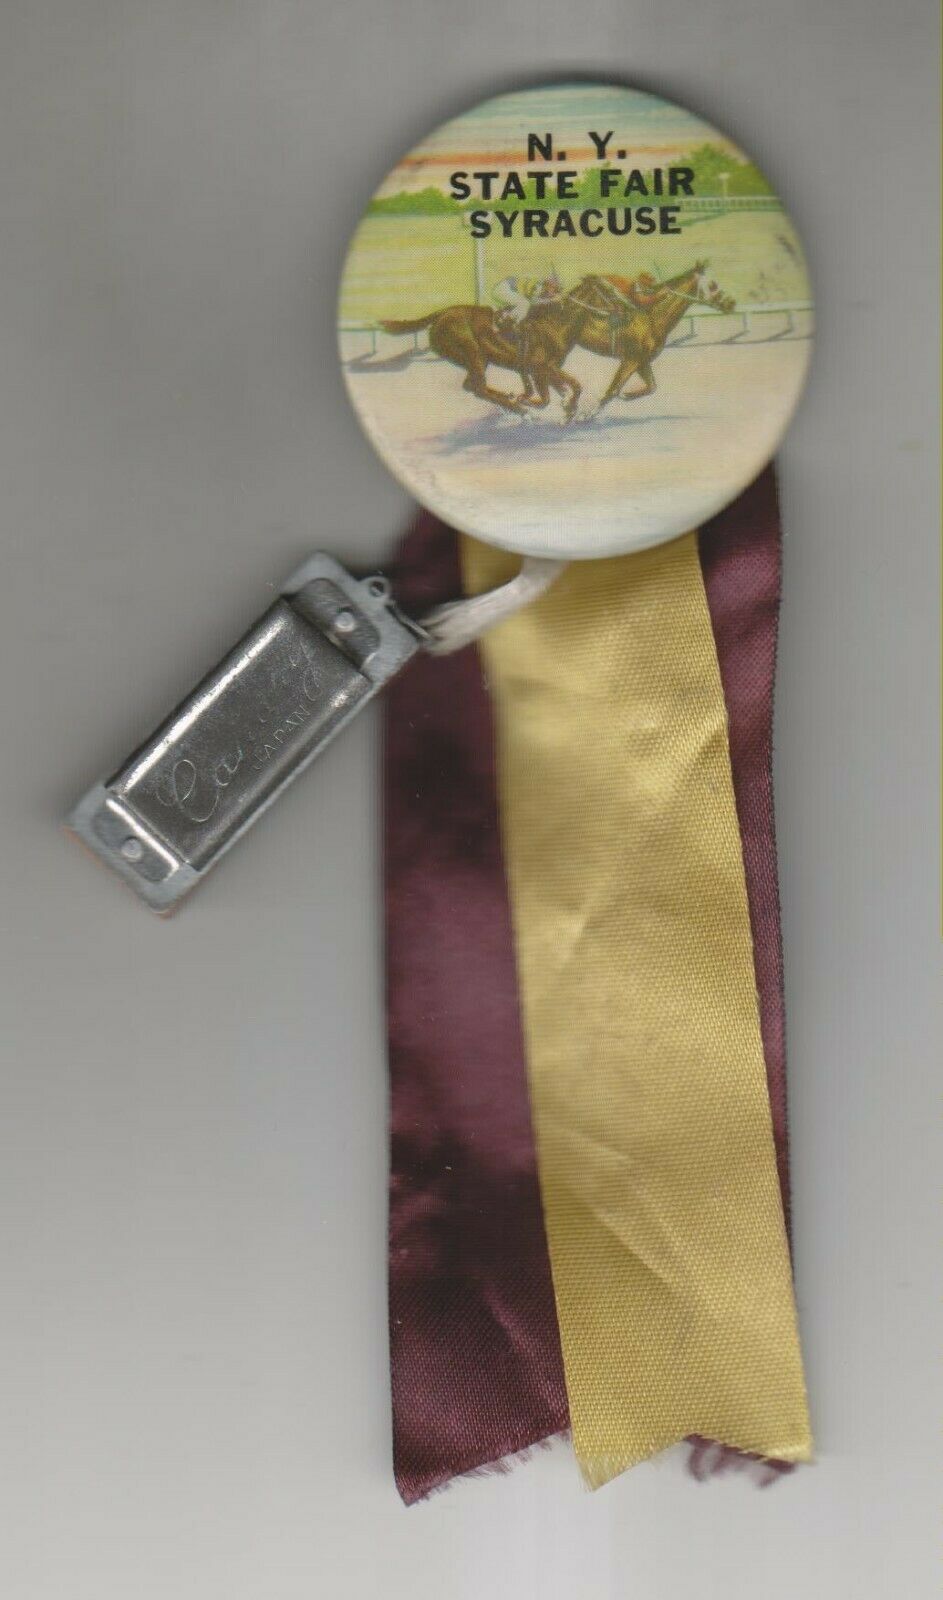 Vintage Pin/ribbon & Small Canary Harmonica - New York State Fair - Syracuse